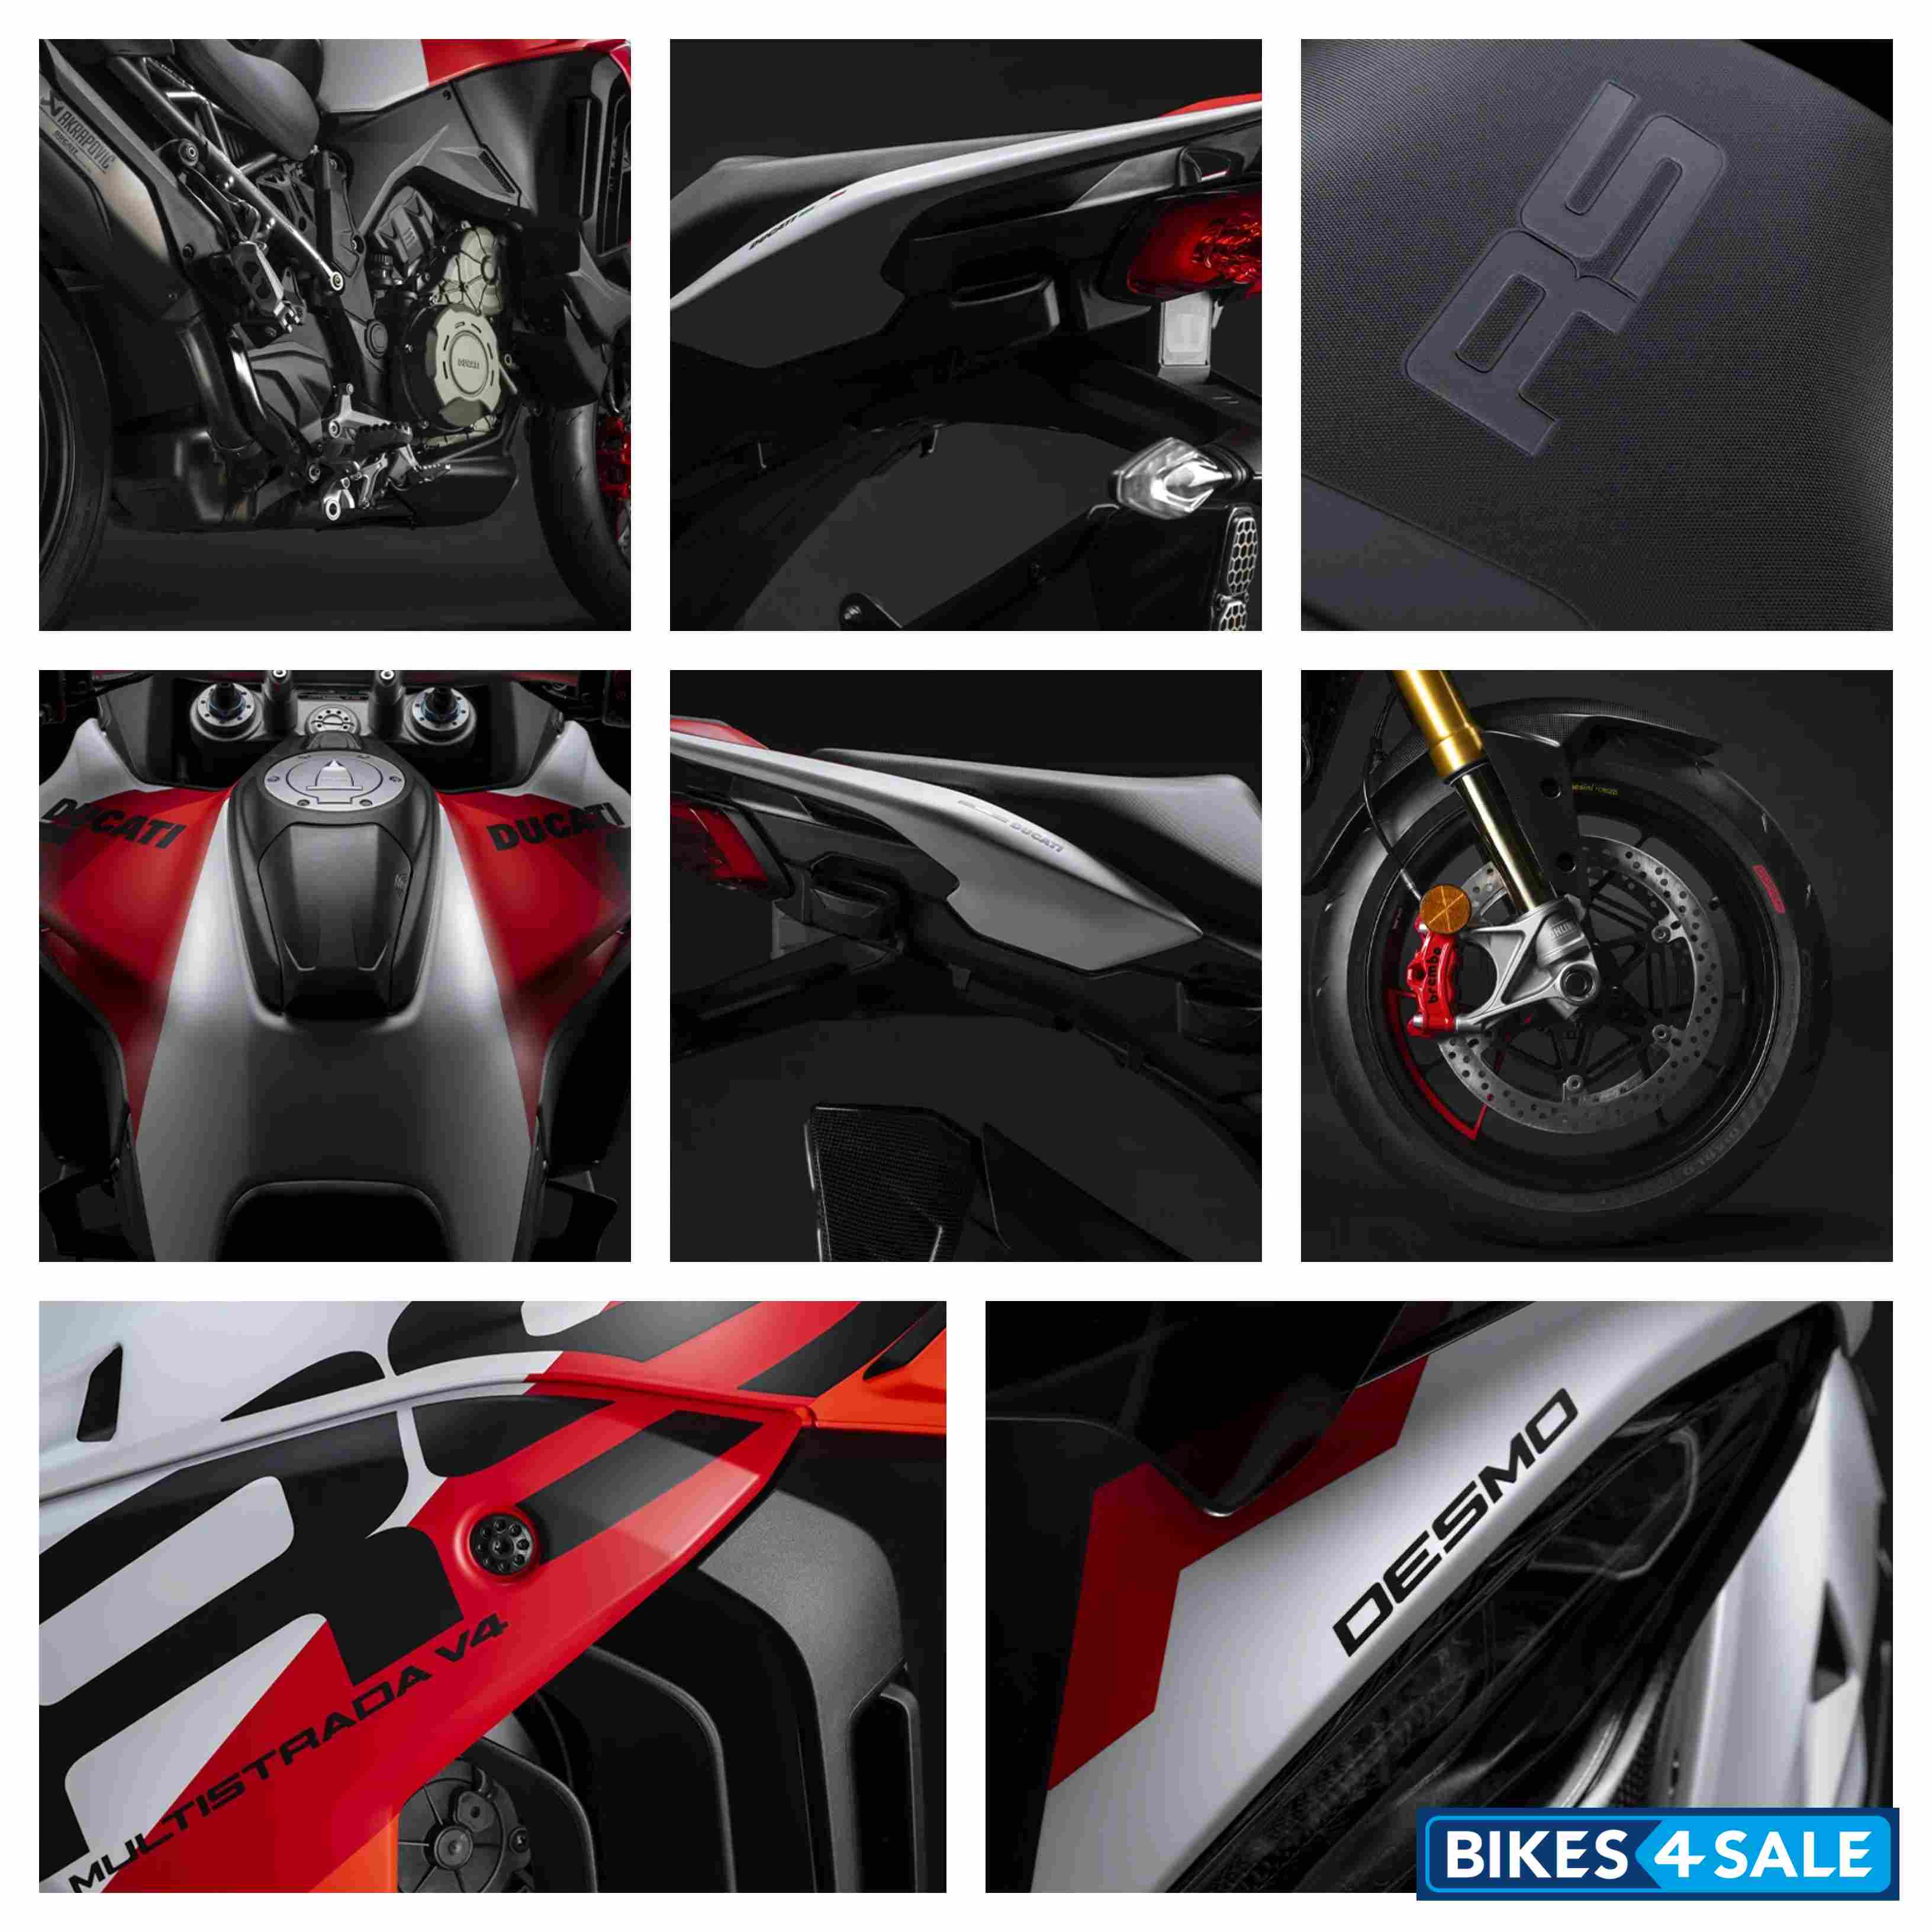 Ducati Multistrada V4 RS Features